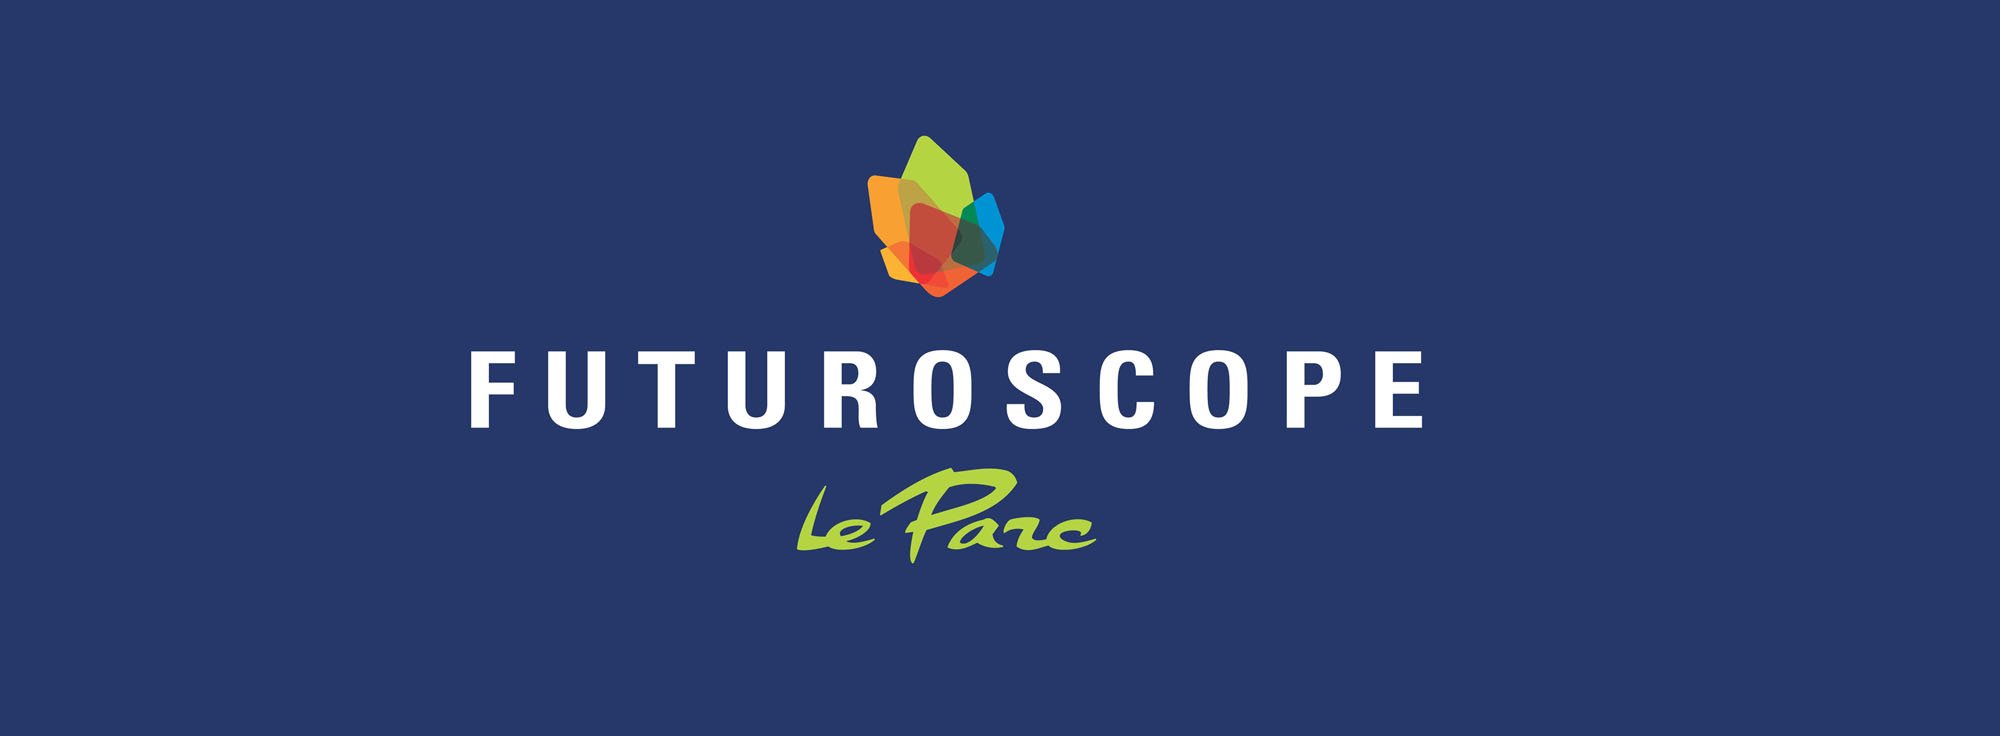 futuroscope007